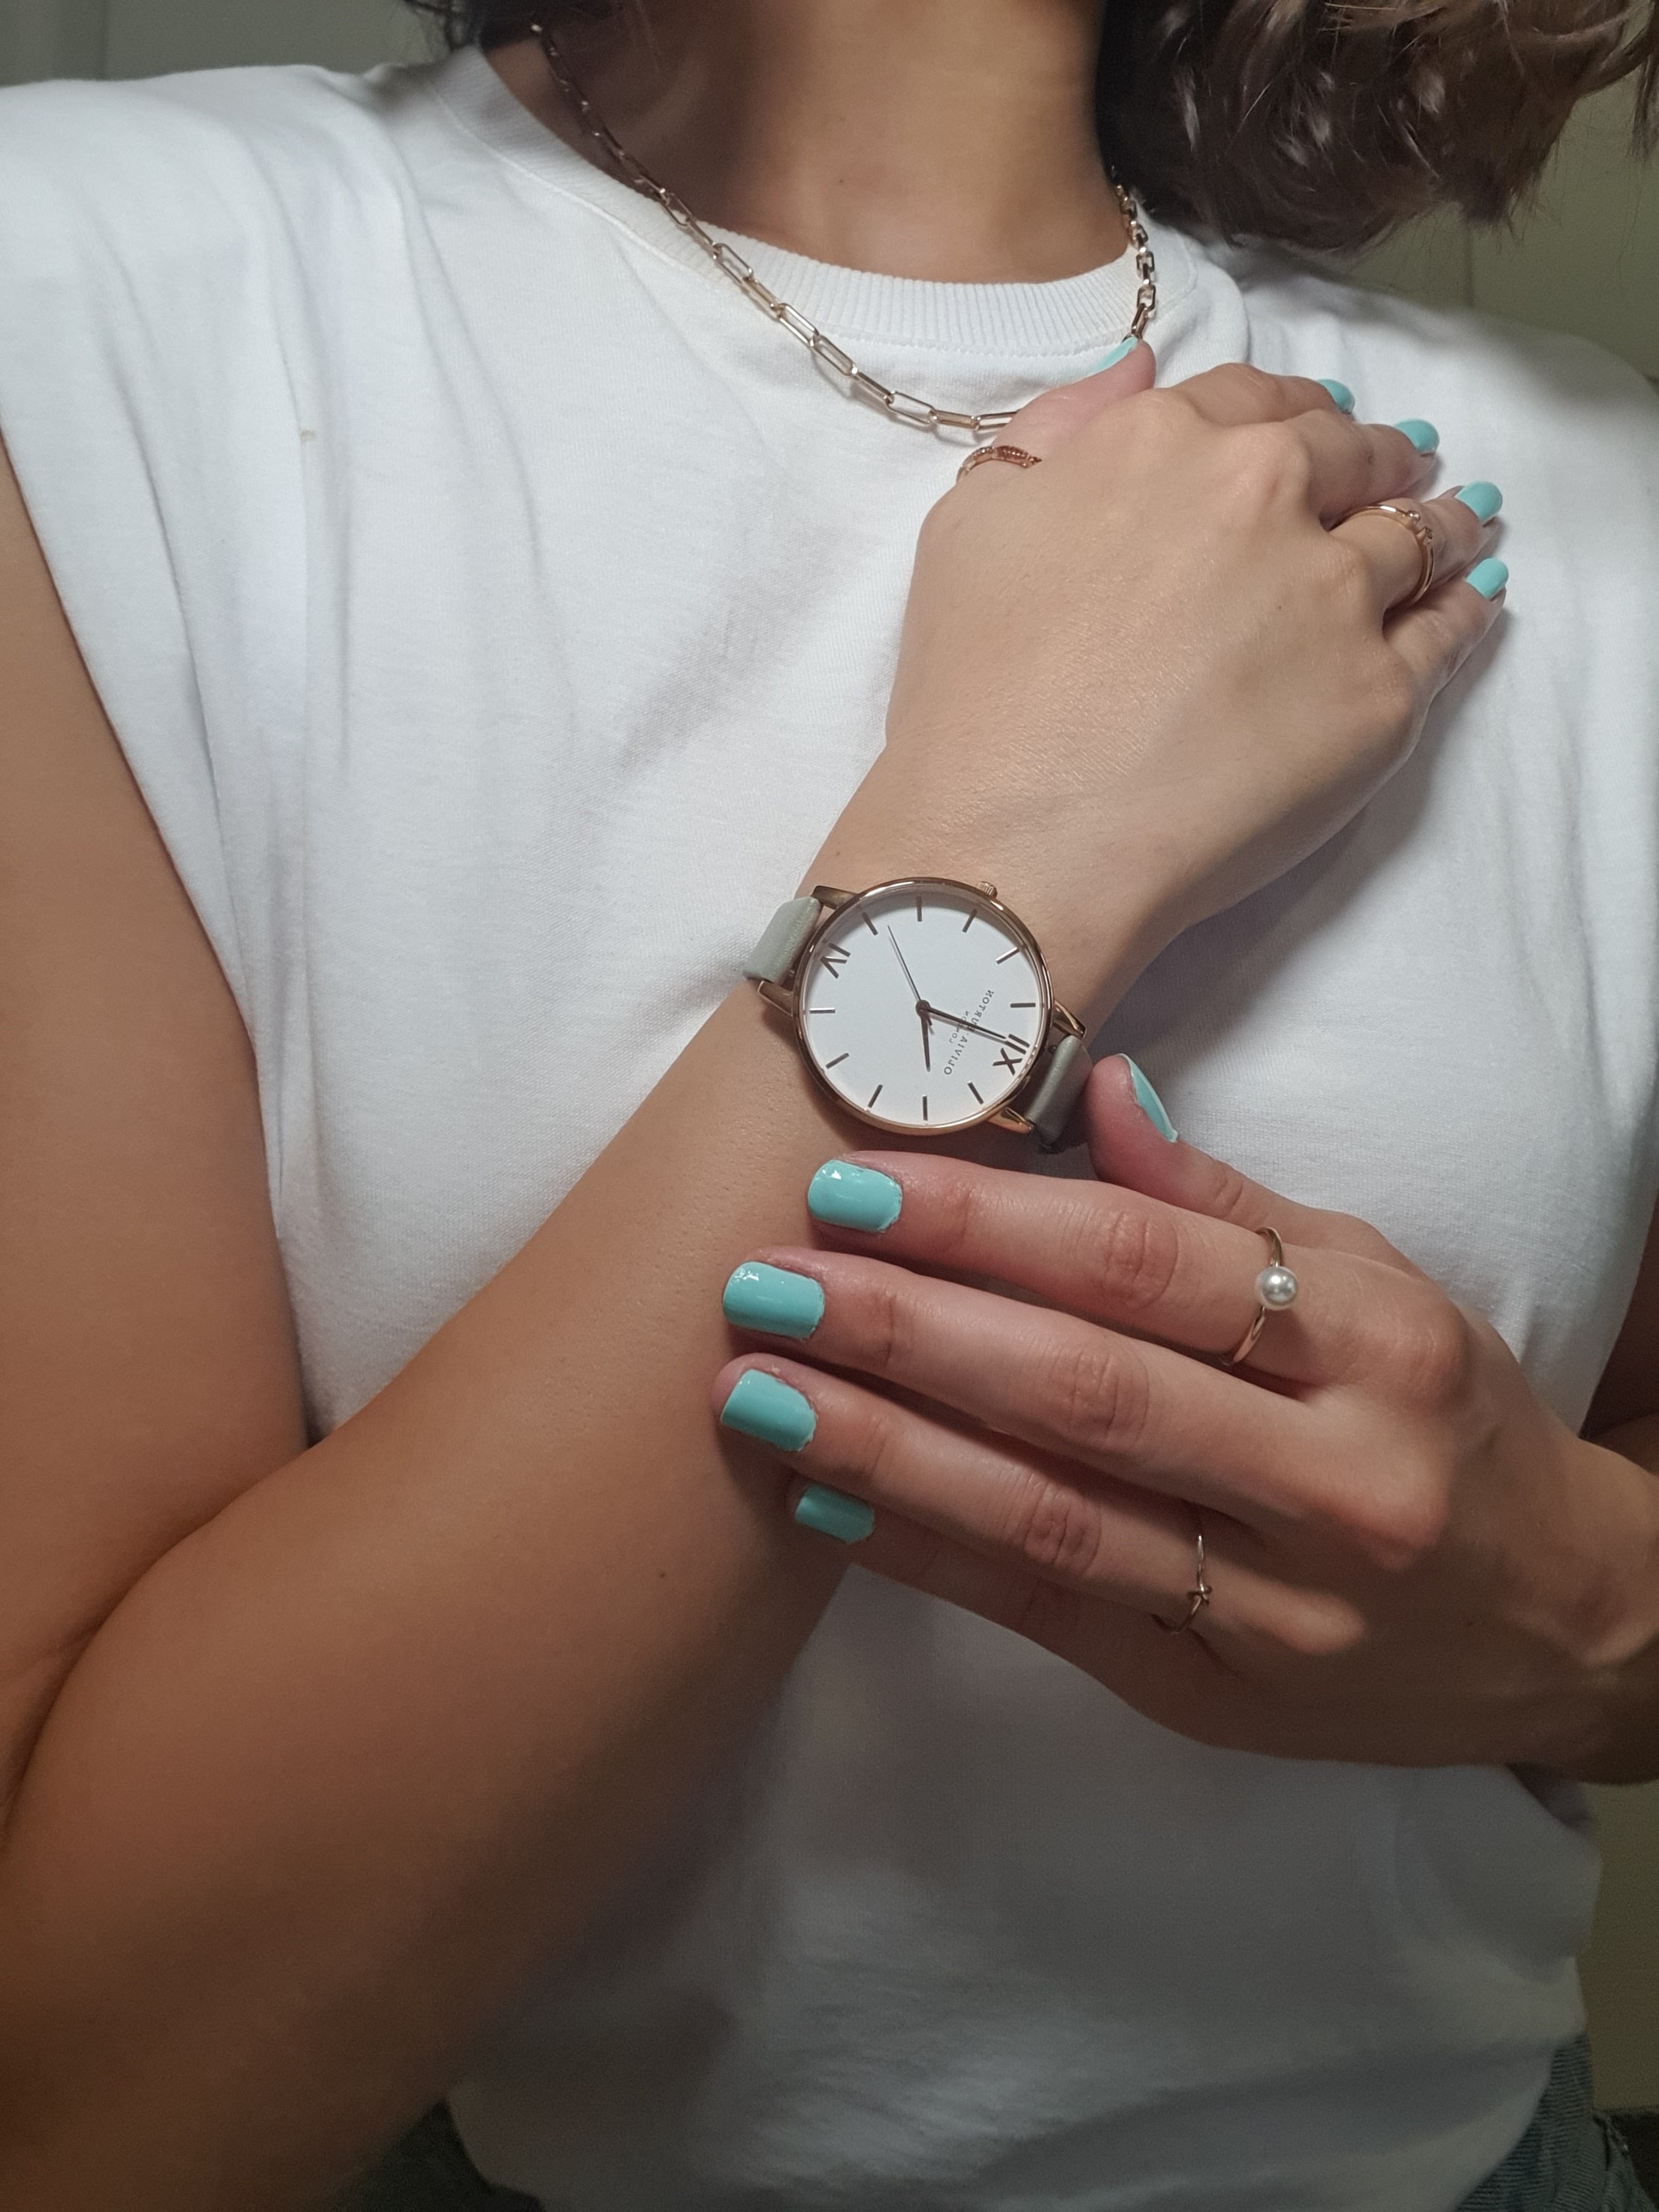 christina vlask showing olivia burton watch and wearing speamint cream nail polish a bright bold aquamarine shade 